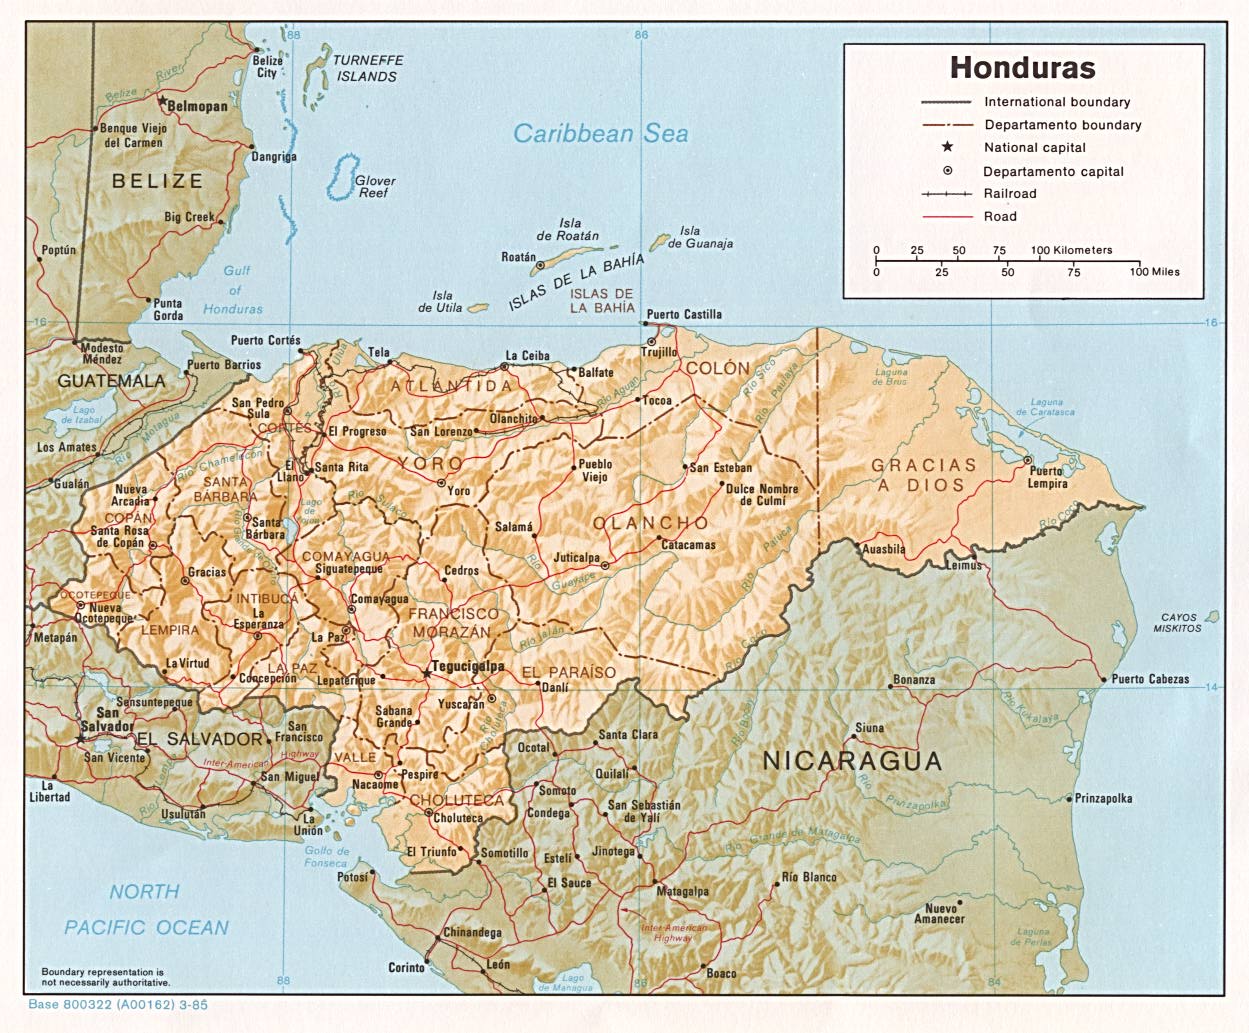 Map of Honduras 1985